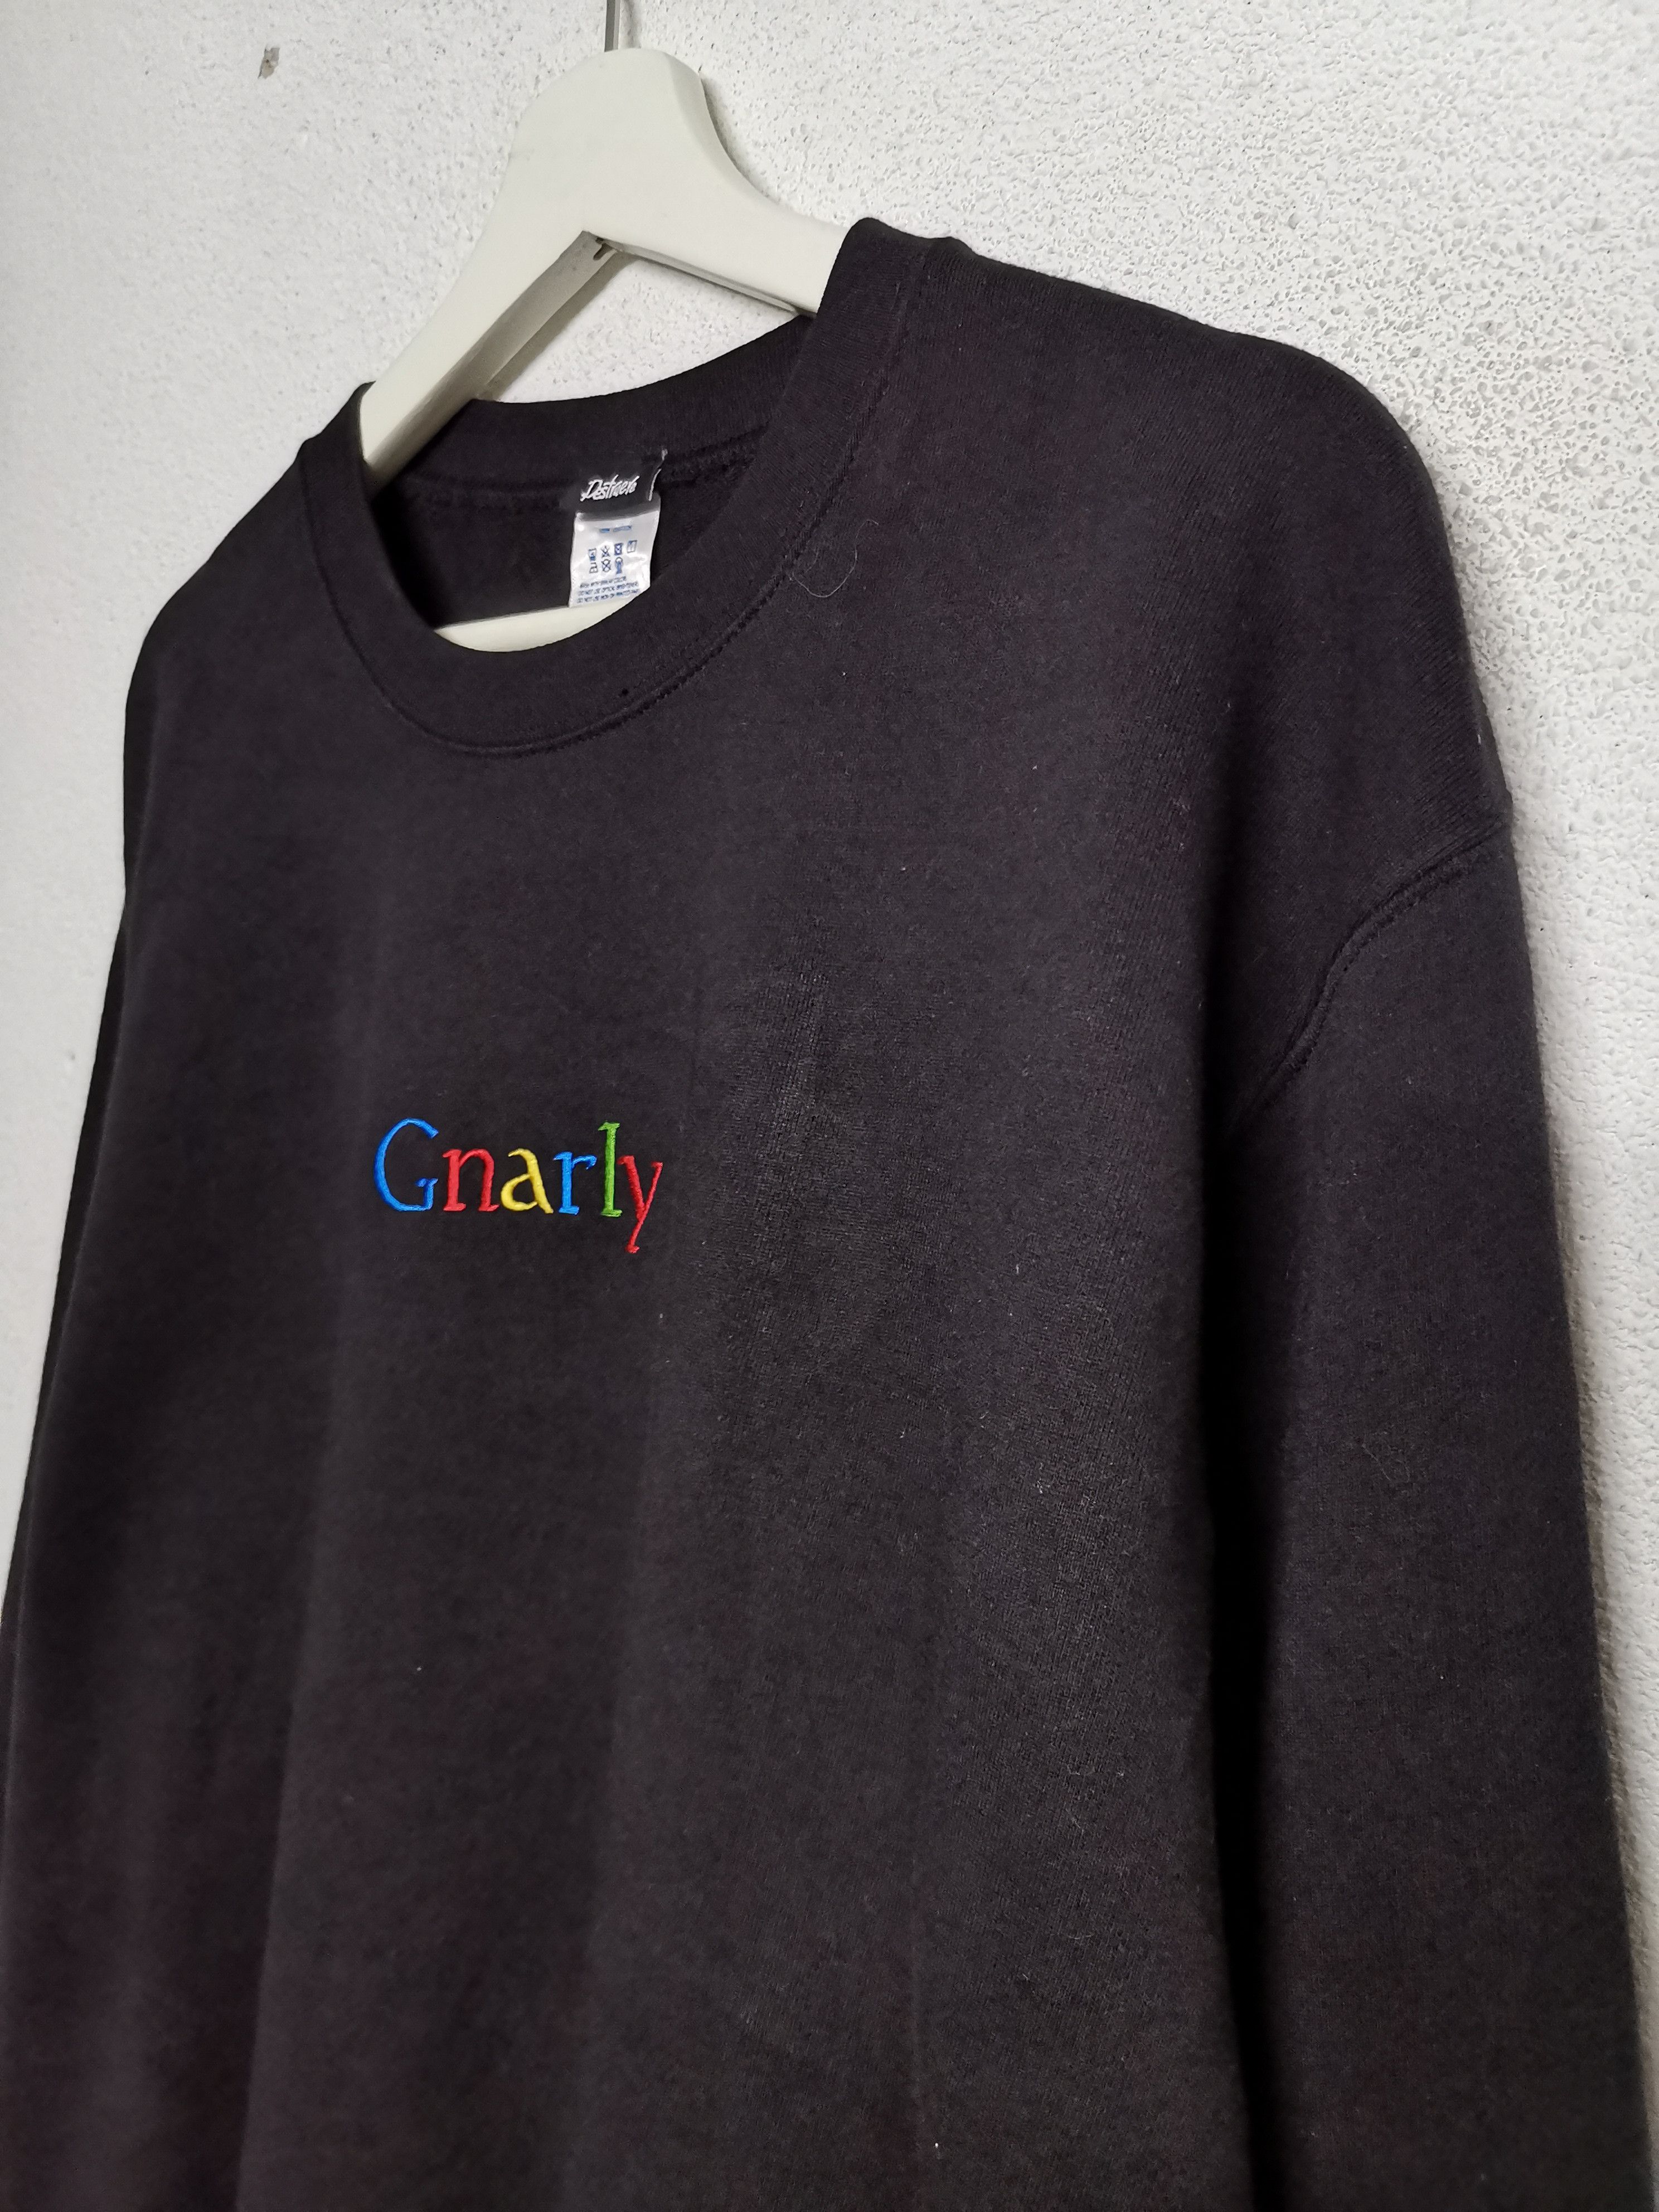 Designer Destruere Gnarly Embroidery Logo Black Sweatshirt Size US L / EU 52-54 / 3 - 4 Thumbnail